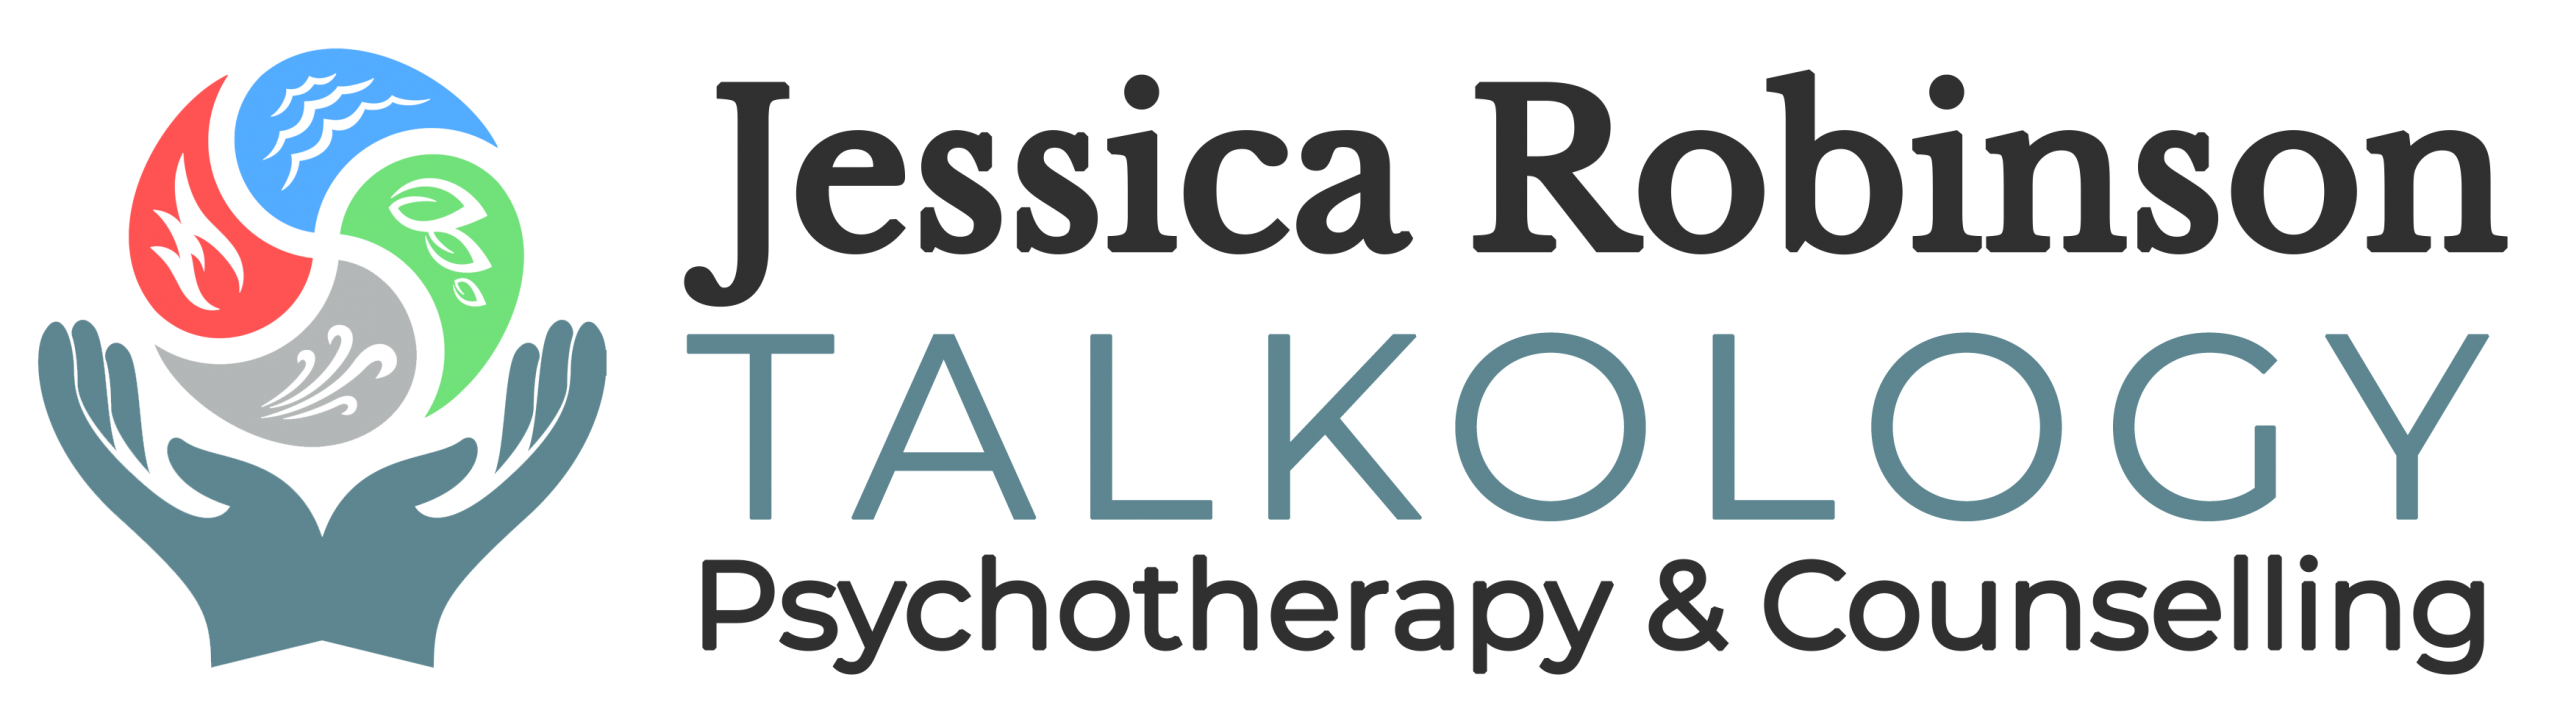 Jessica Robinson Talkology logo